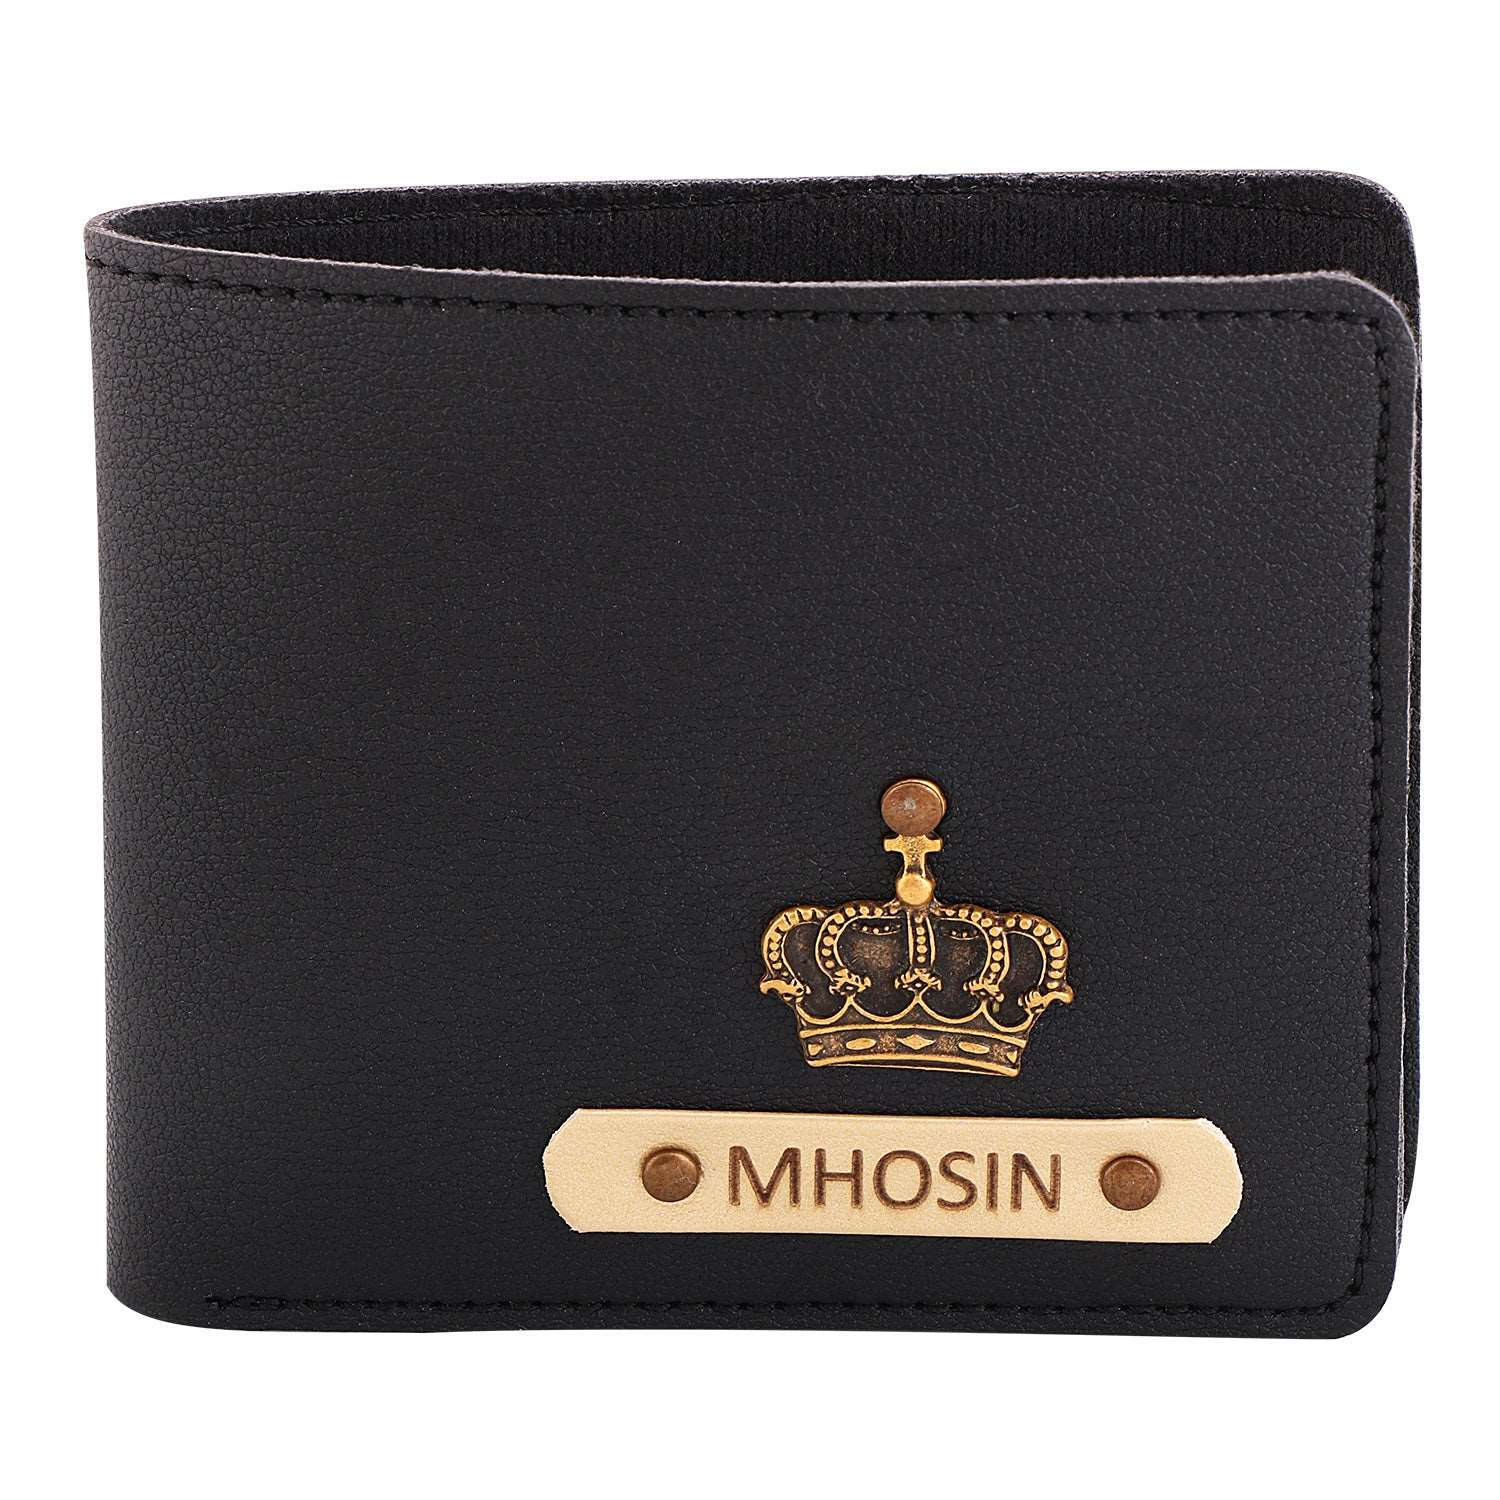 Black Customized leather Men’s Wallet